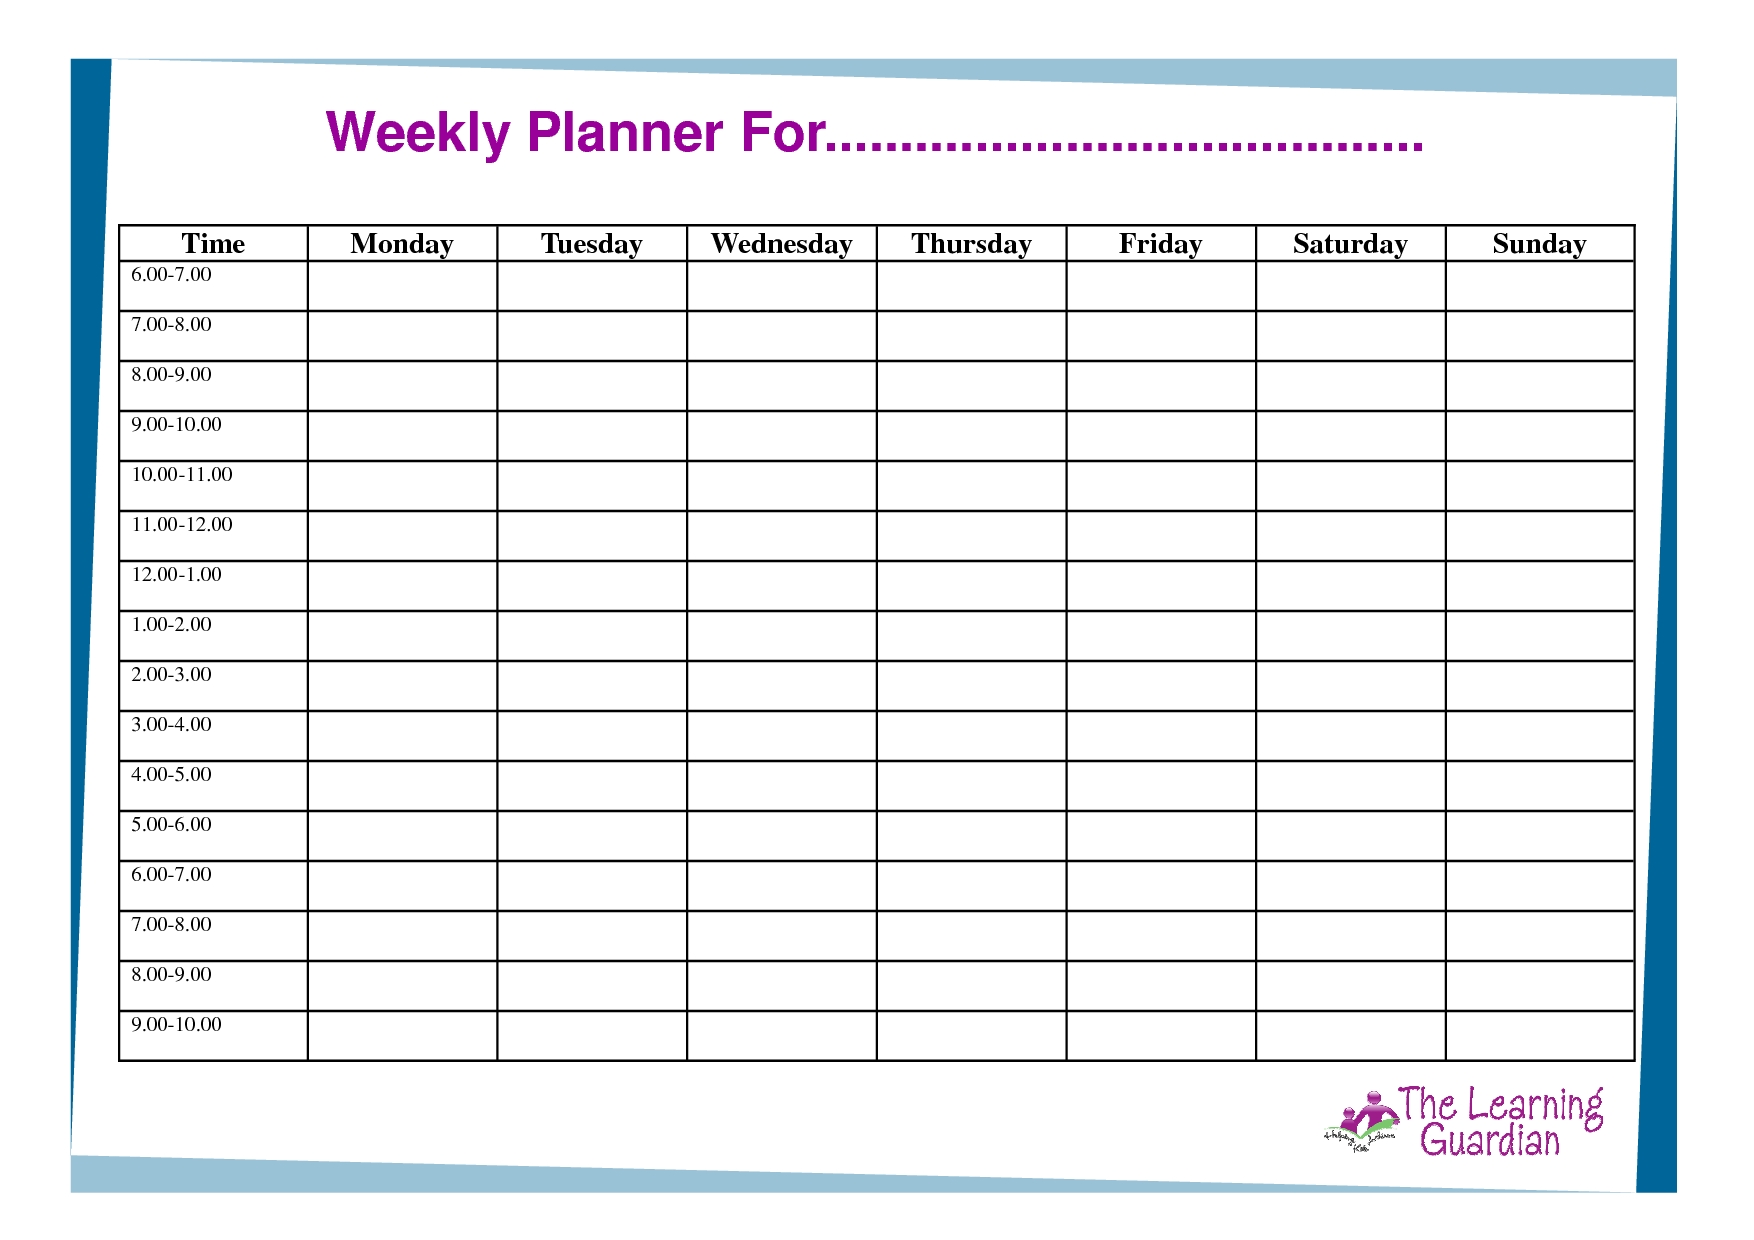 Free Printable Weekly Calendar Templates | Weekly Planner Printable Blank Caldendar Monday - Friday